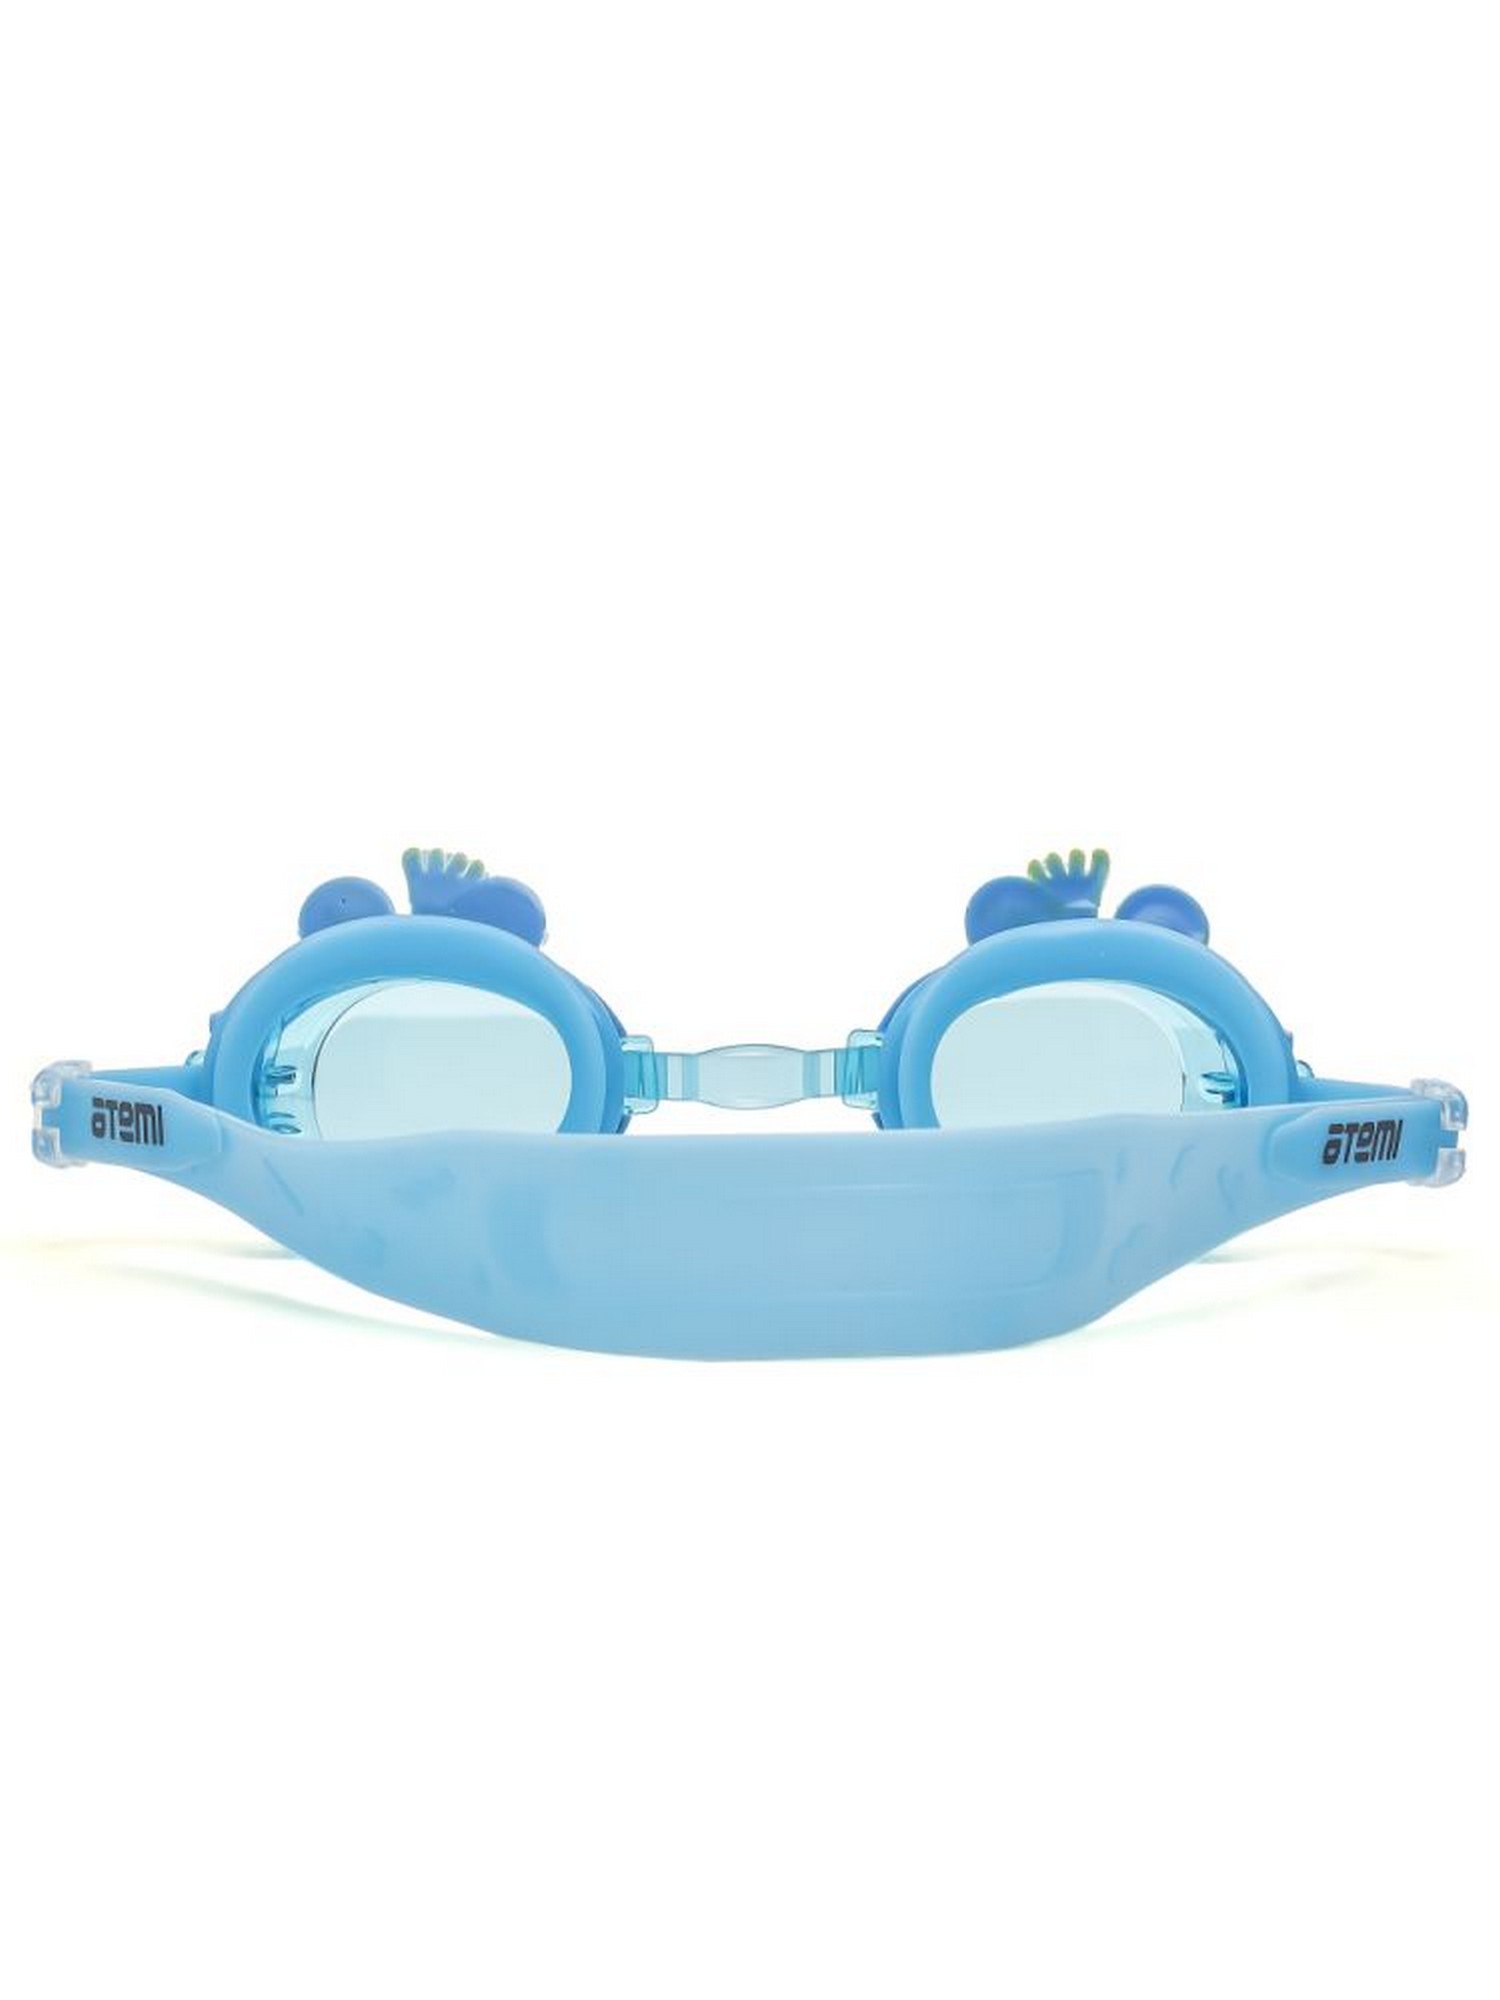 Очки для плавания детские Novusi NJG113 лягушка, голубой 1500_2000